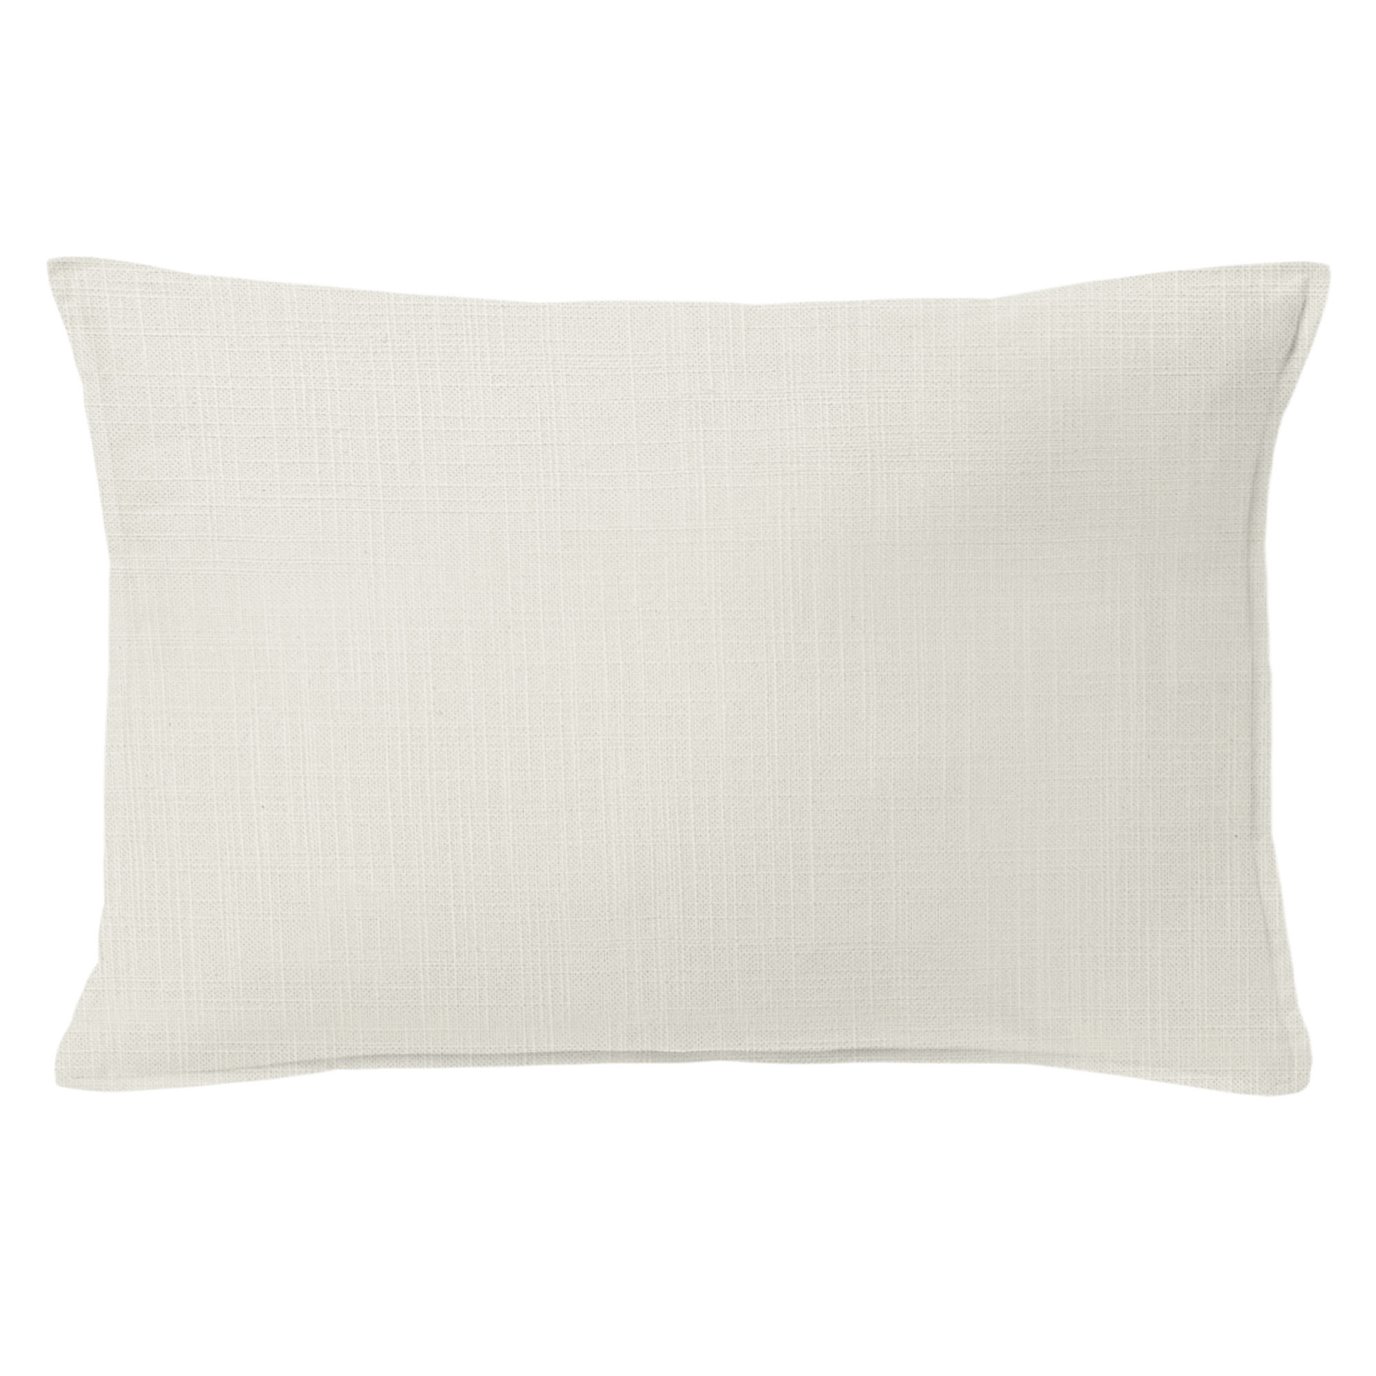 Ancebridge Vanilla Decorative Pillow - Size 14"x20" Rectangle